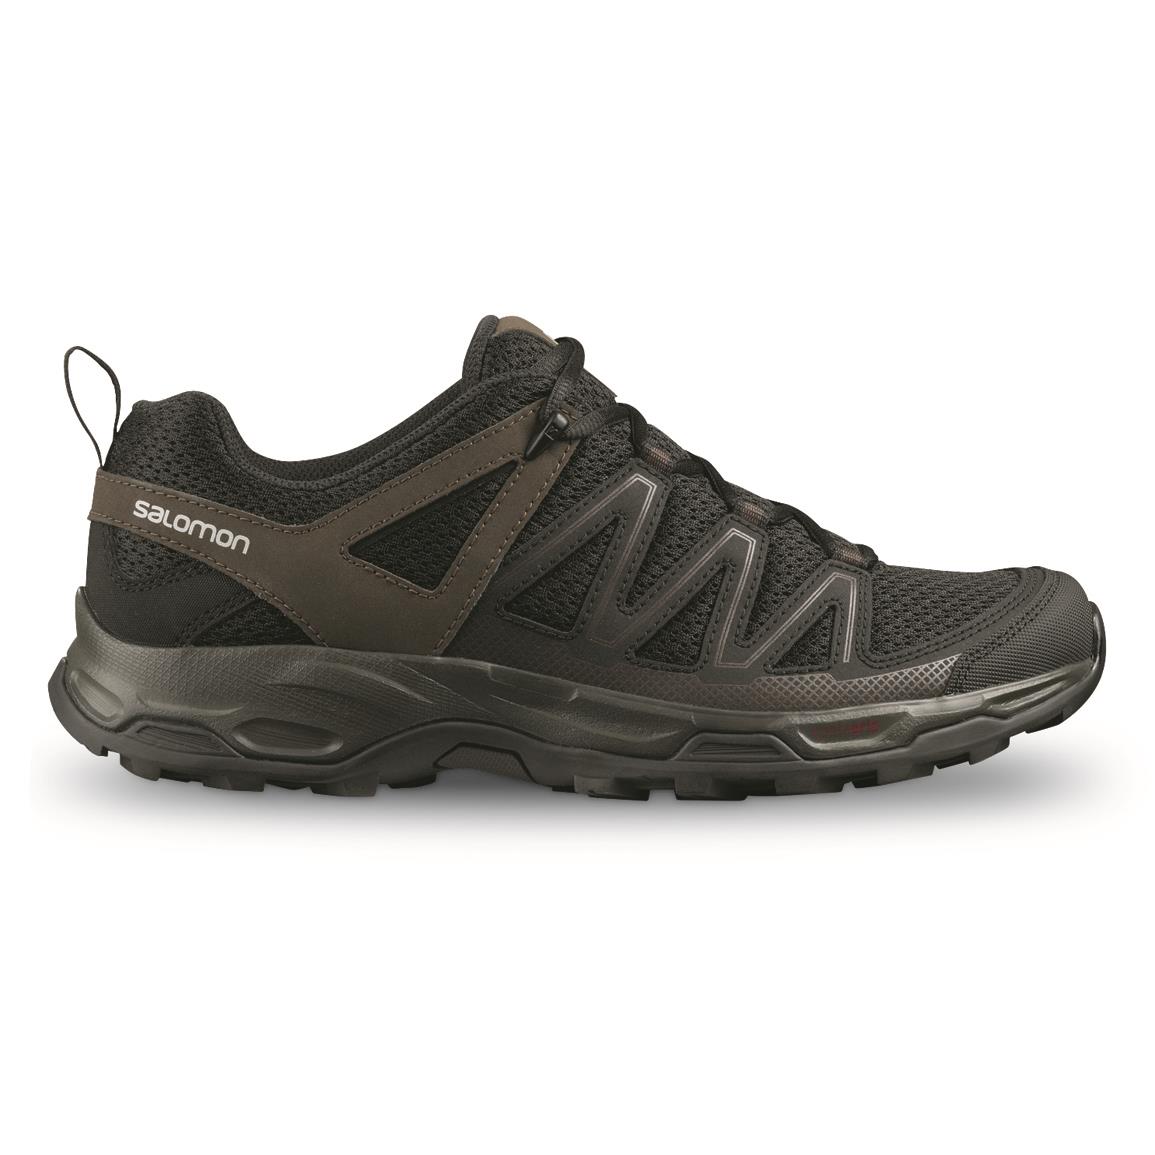 Salomon Men's Pathfinder Hiking Shoes, Black/wren/wren